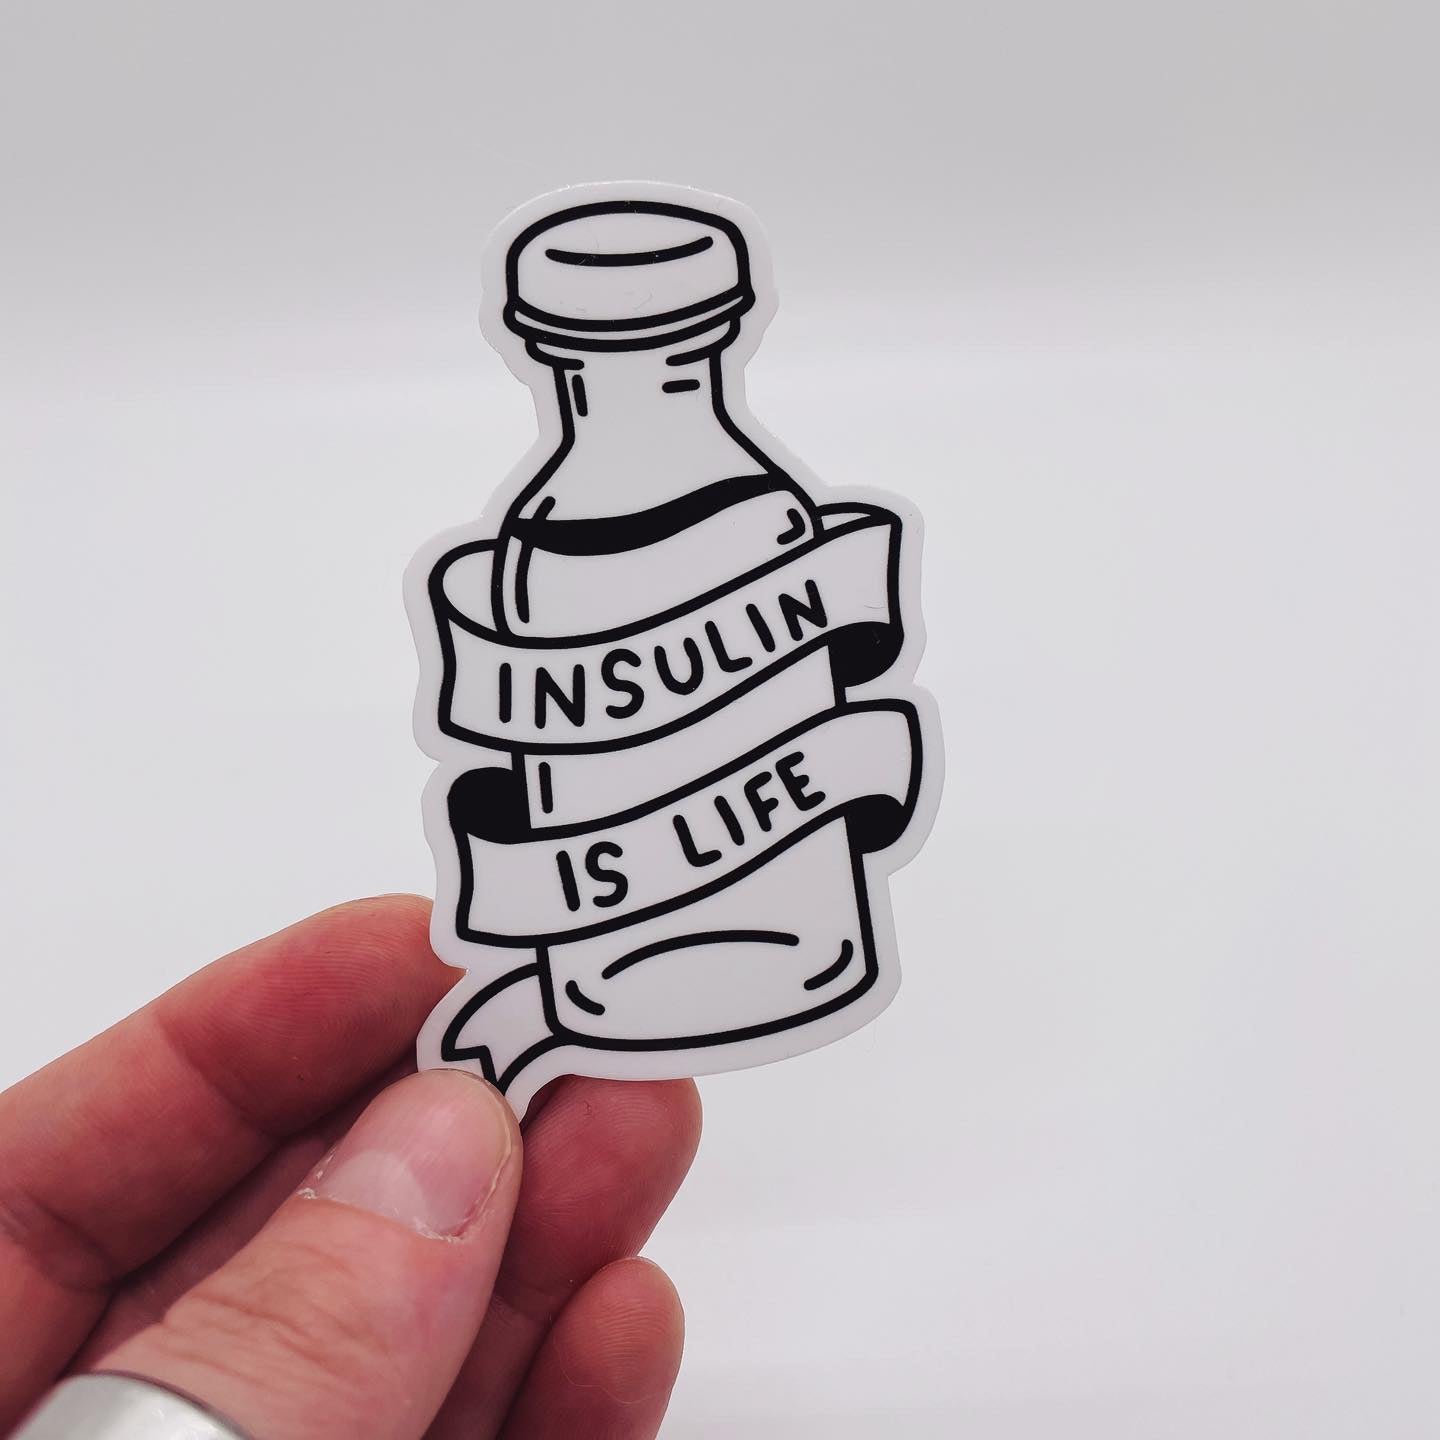 Insulin Is Life Sticker